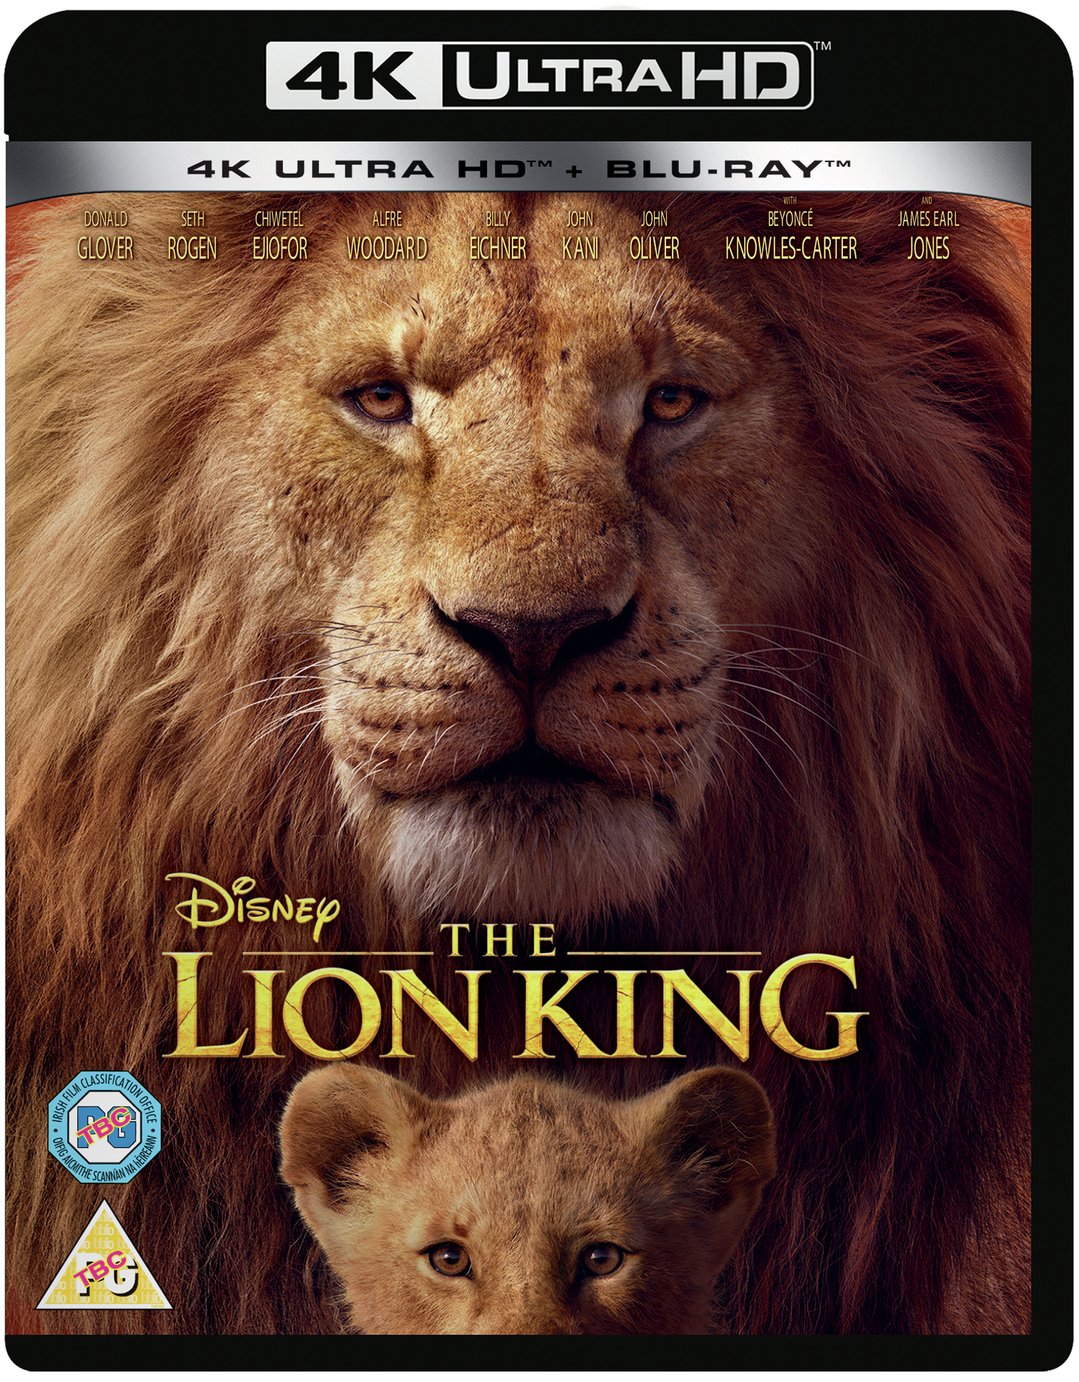 The Lion King 4K UHD Blu-Ray